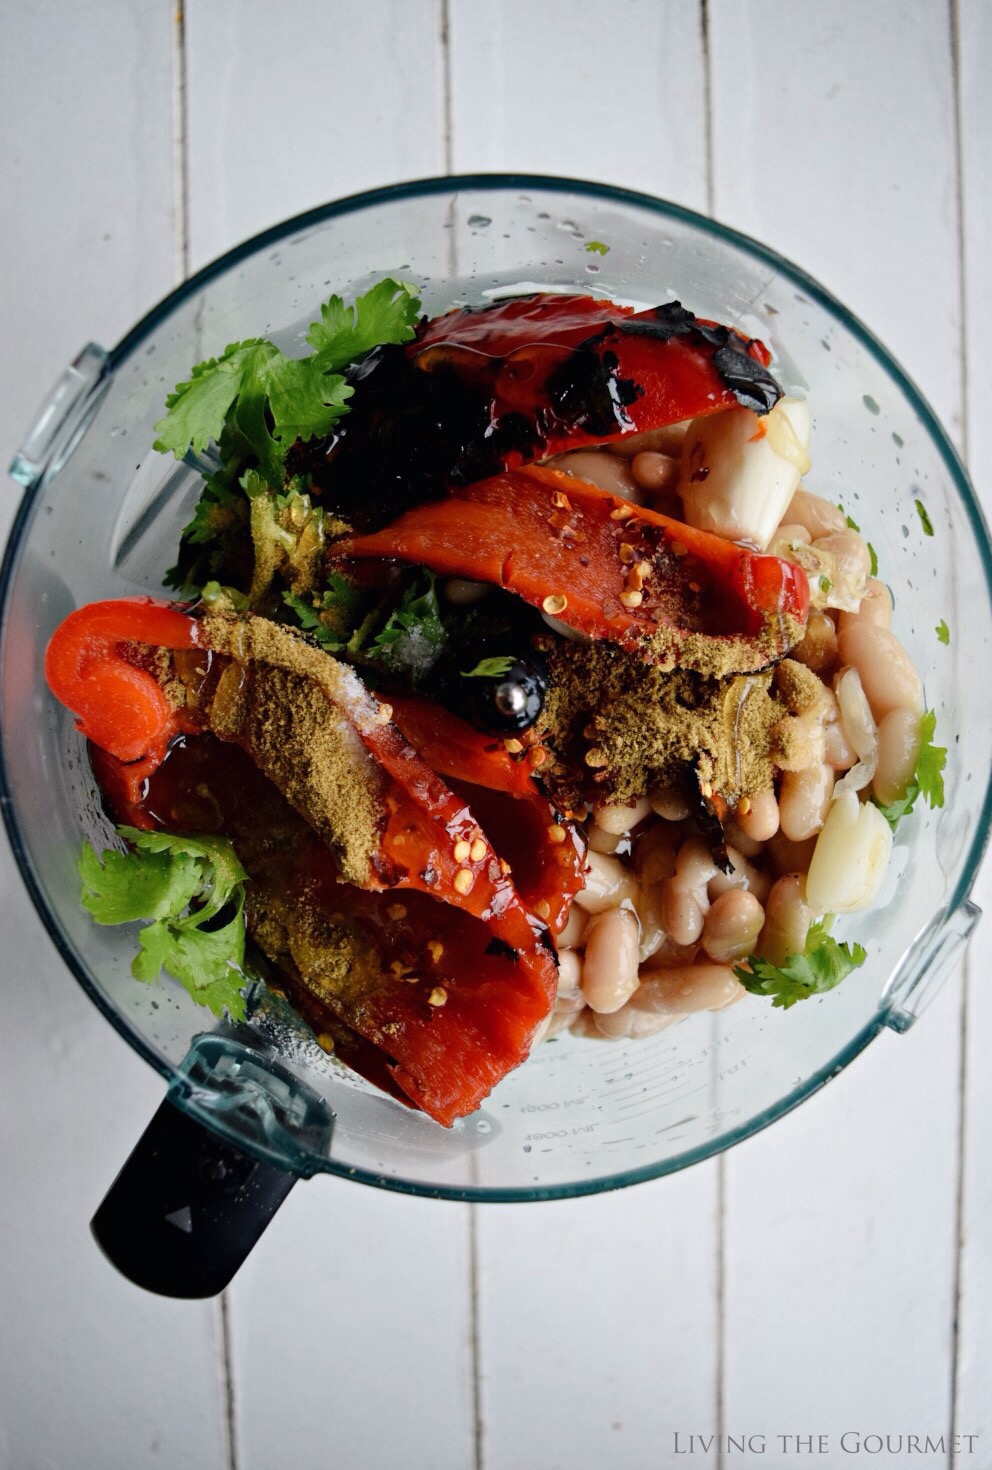 Living the Gourmet: Cilantro and White Bean Dip